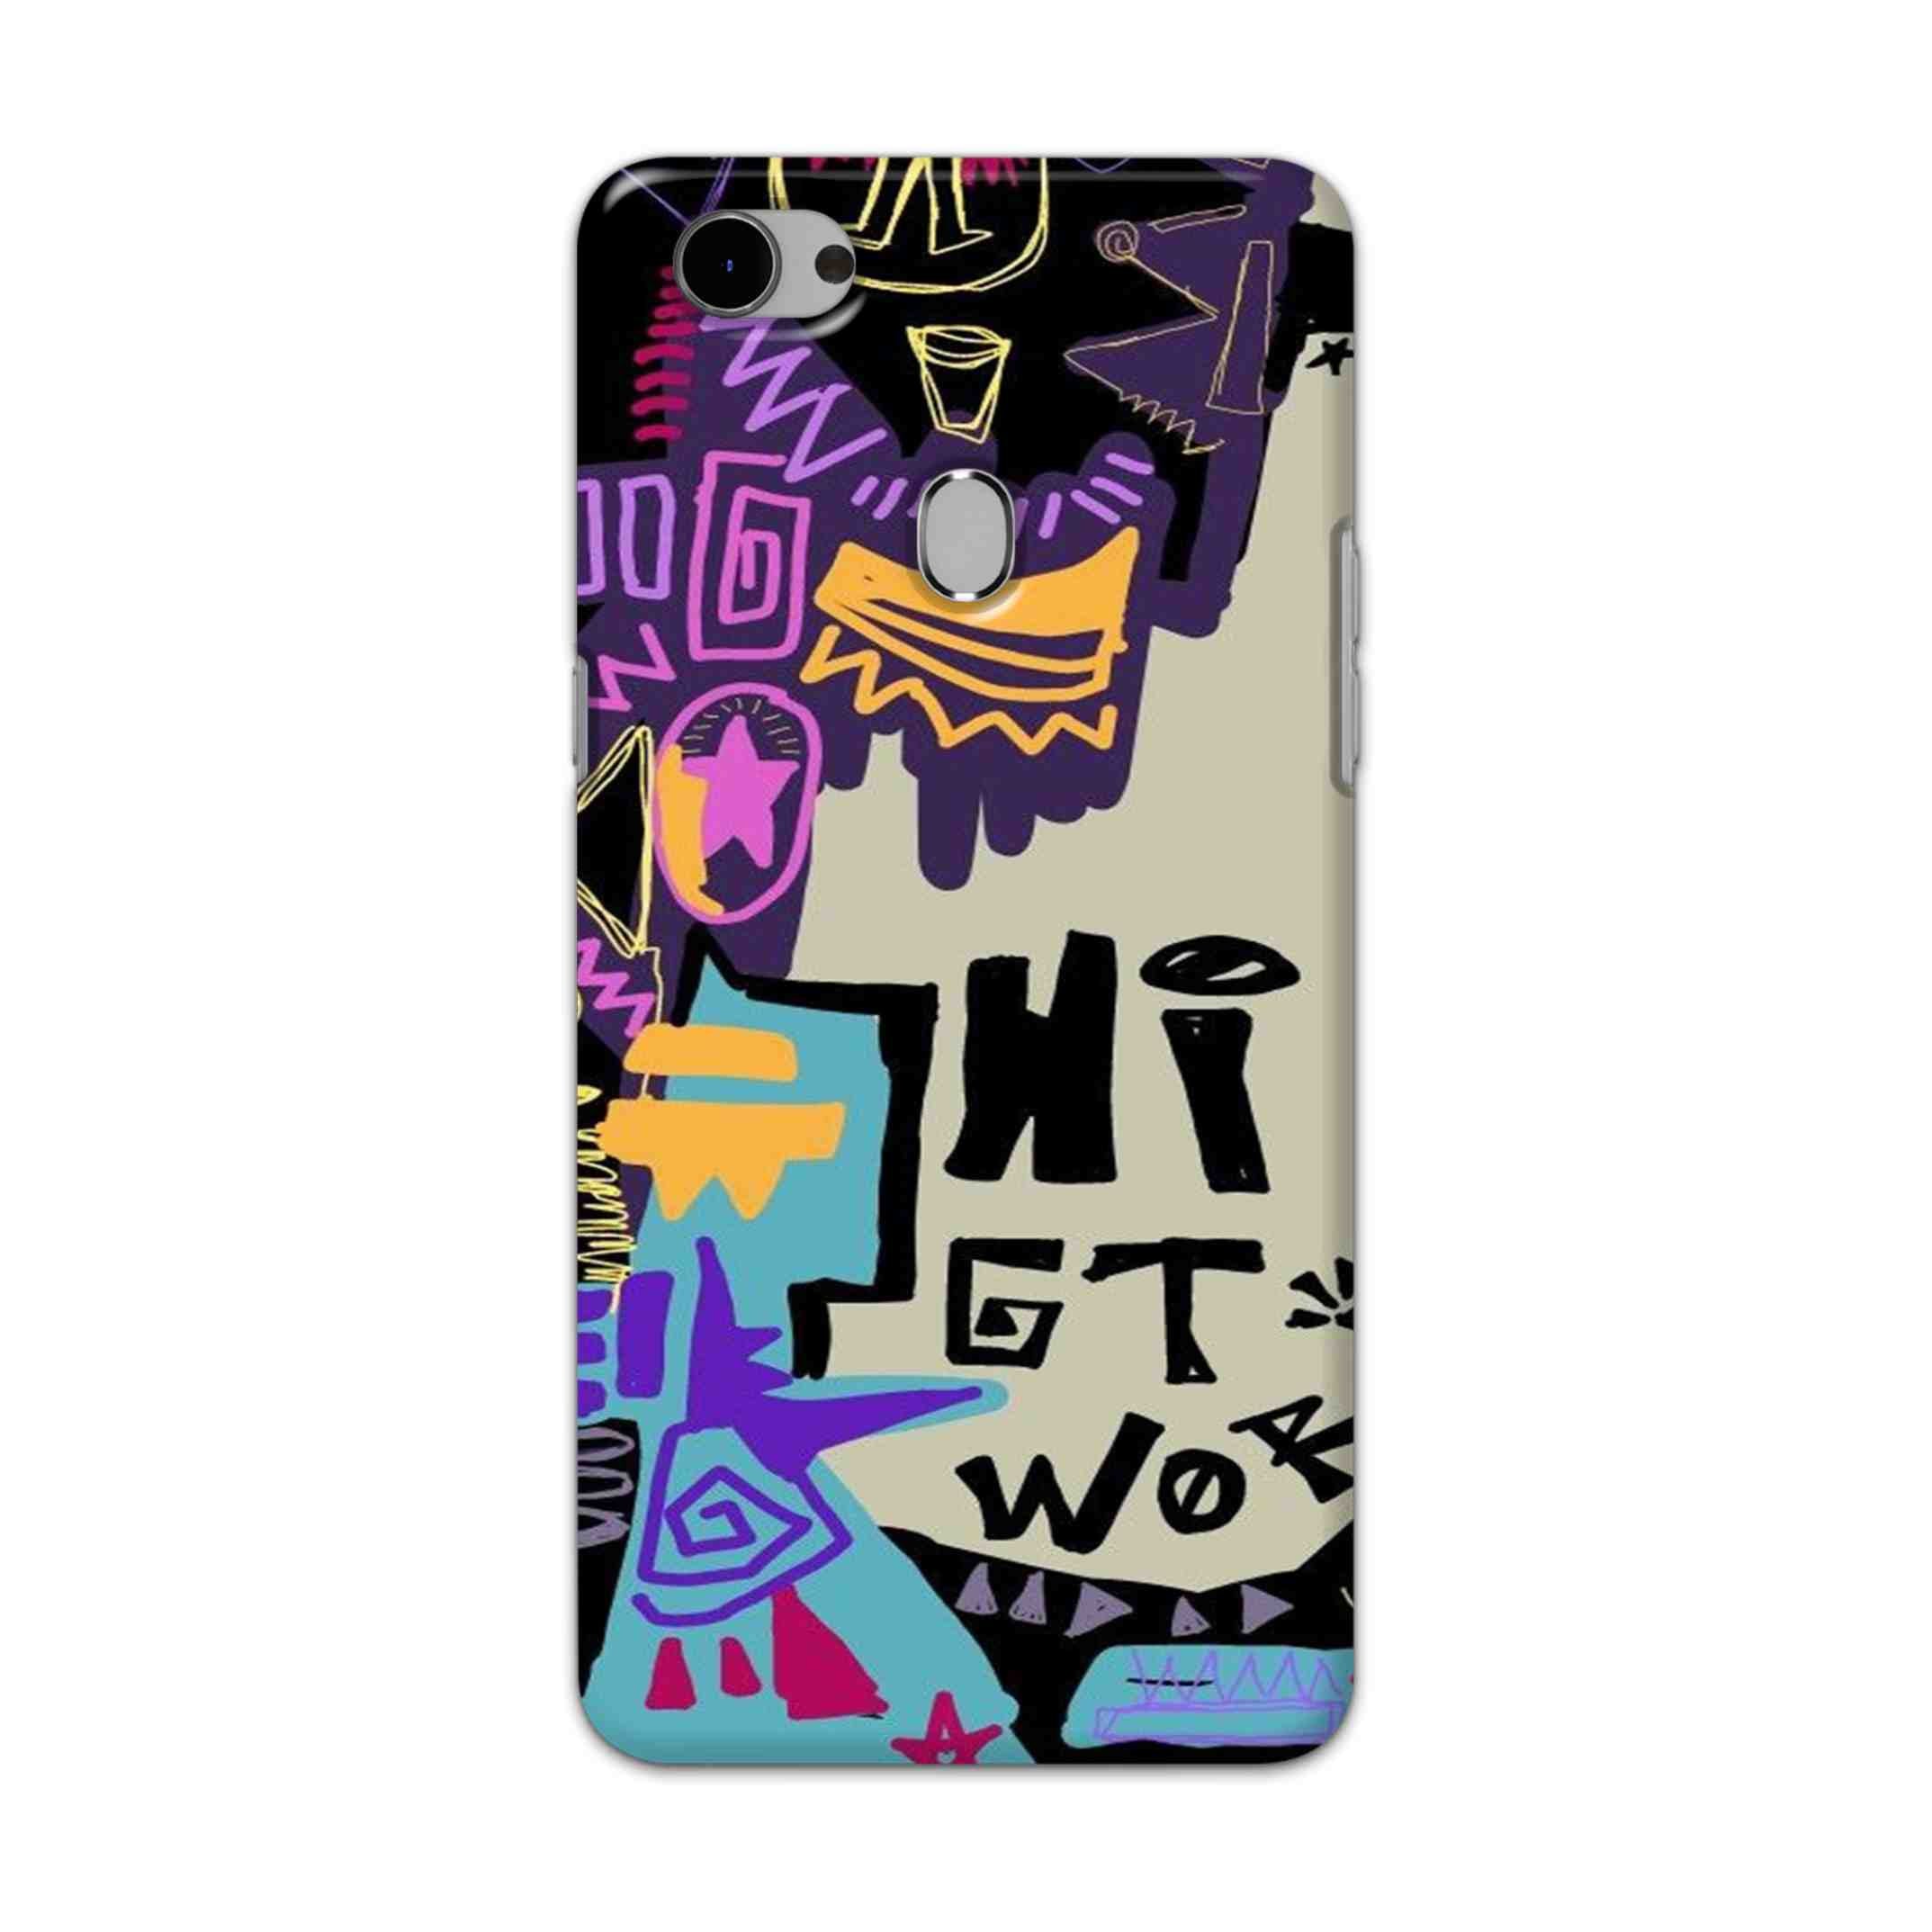 Buy Hi Gt World Hard Back Mobile Phone Case Cover For Oppo F7 Online